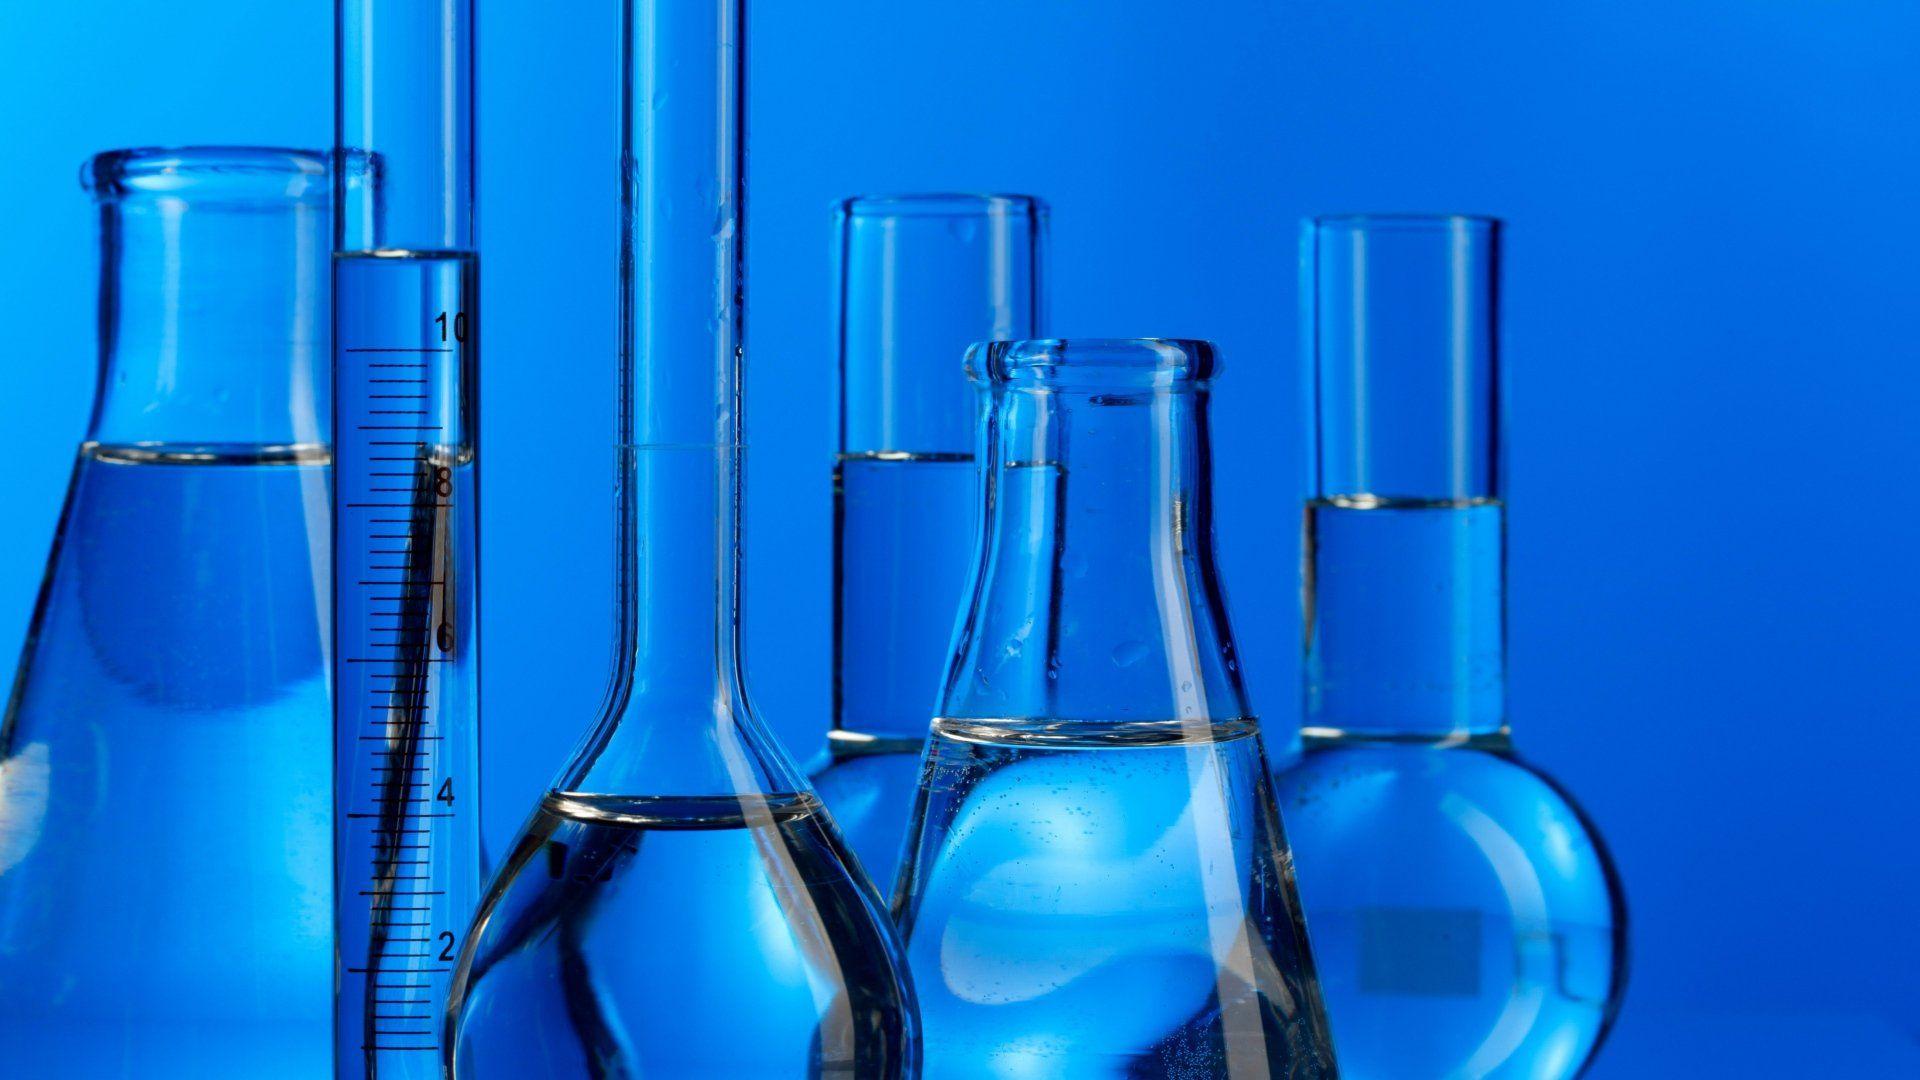 Delightful Chemistry Wallpaper Blue Image JPEG Image